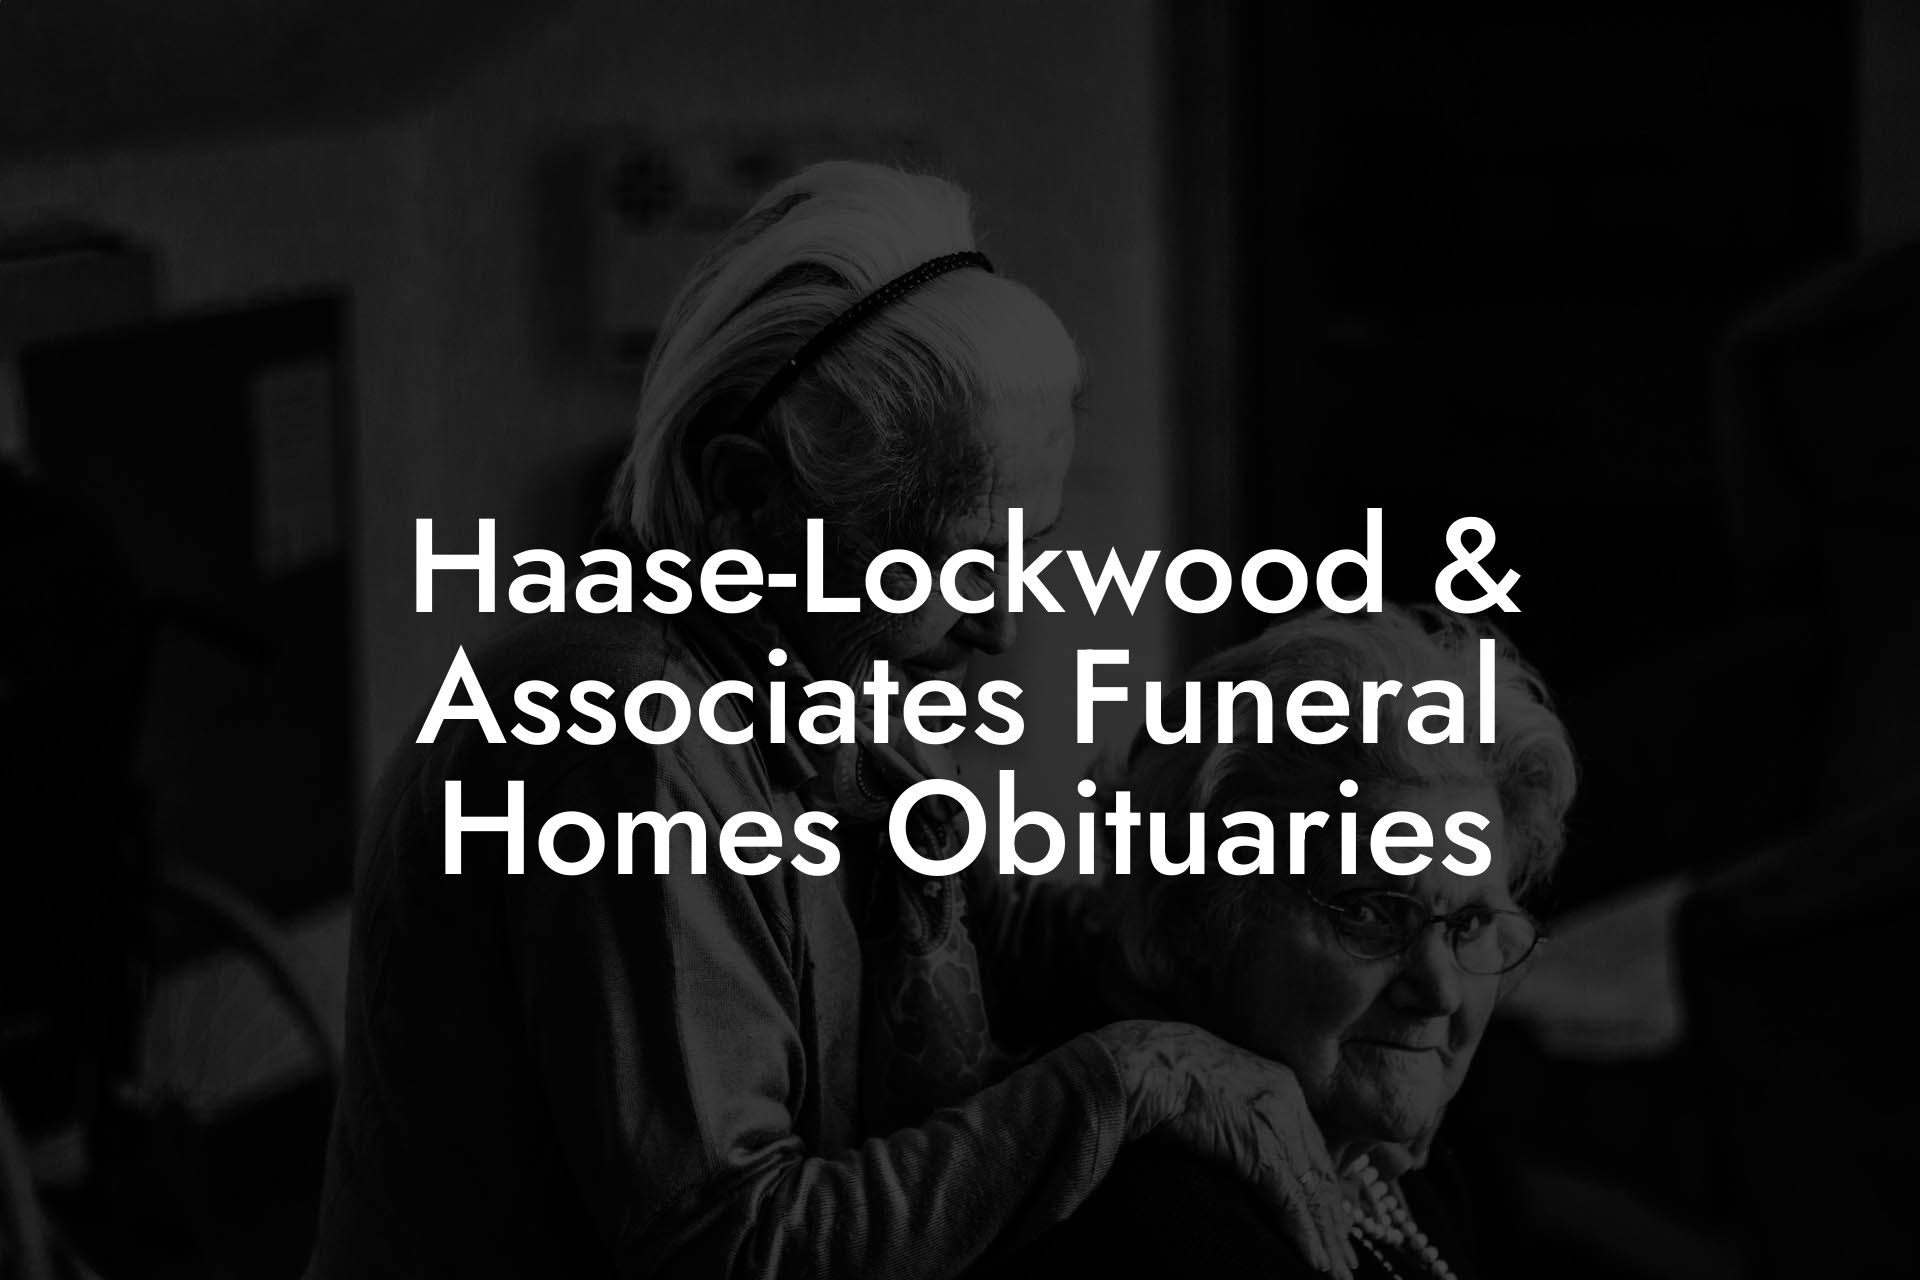 Haase-Lockwood & Associates Funeral Homes Obituaries